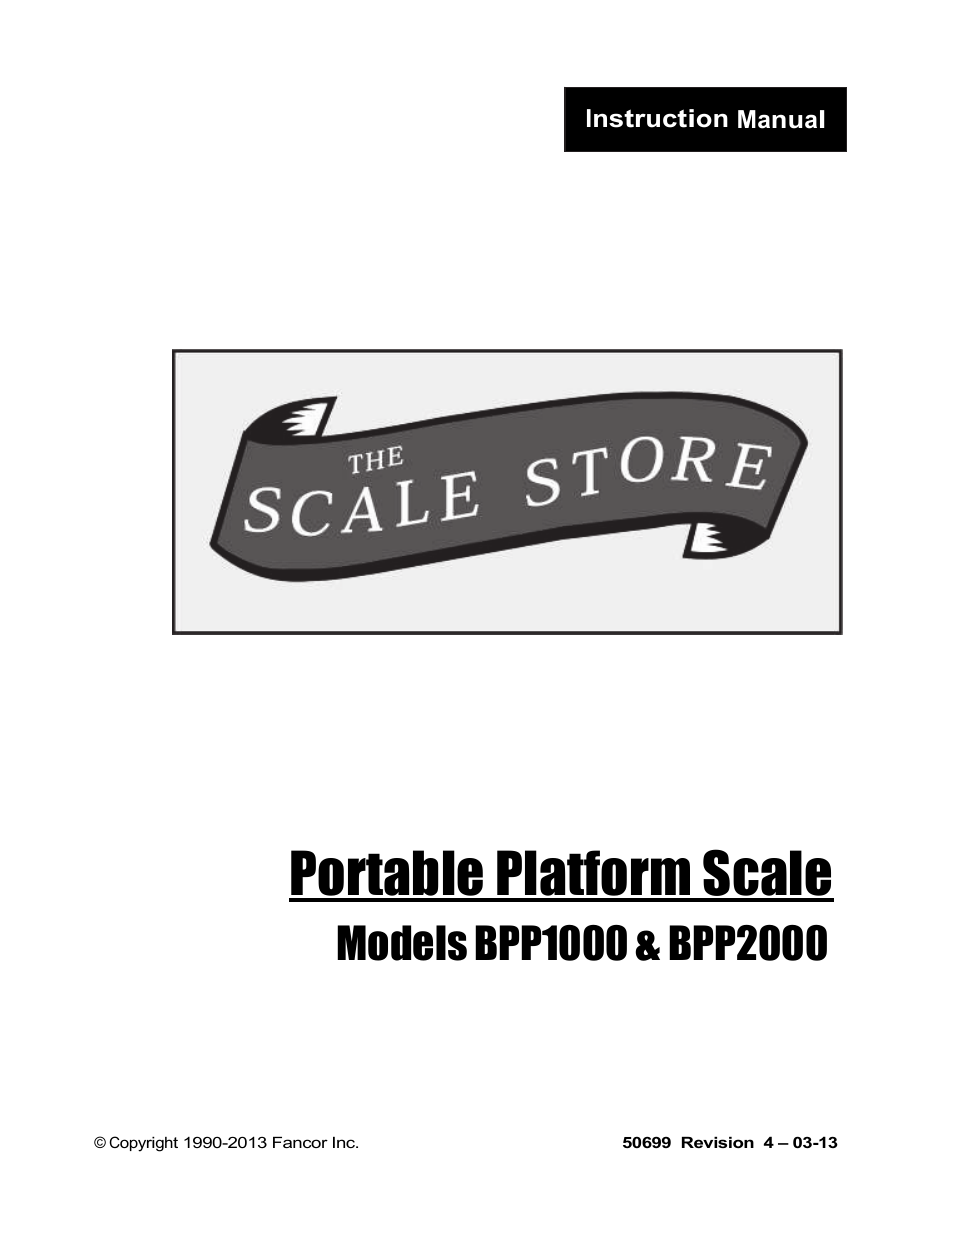 BPP1000 Portable Platform Scale